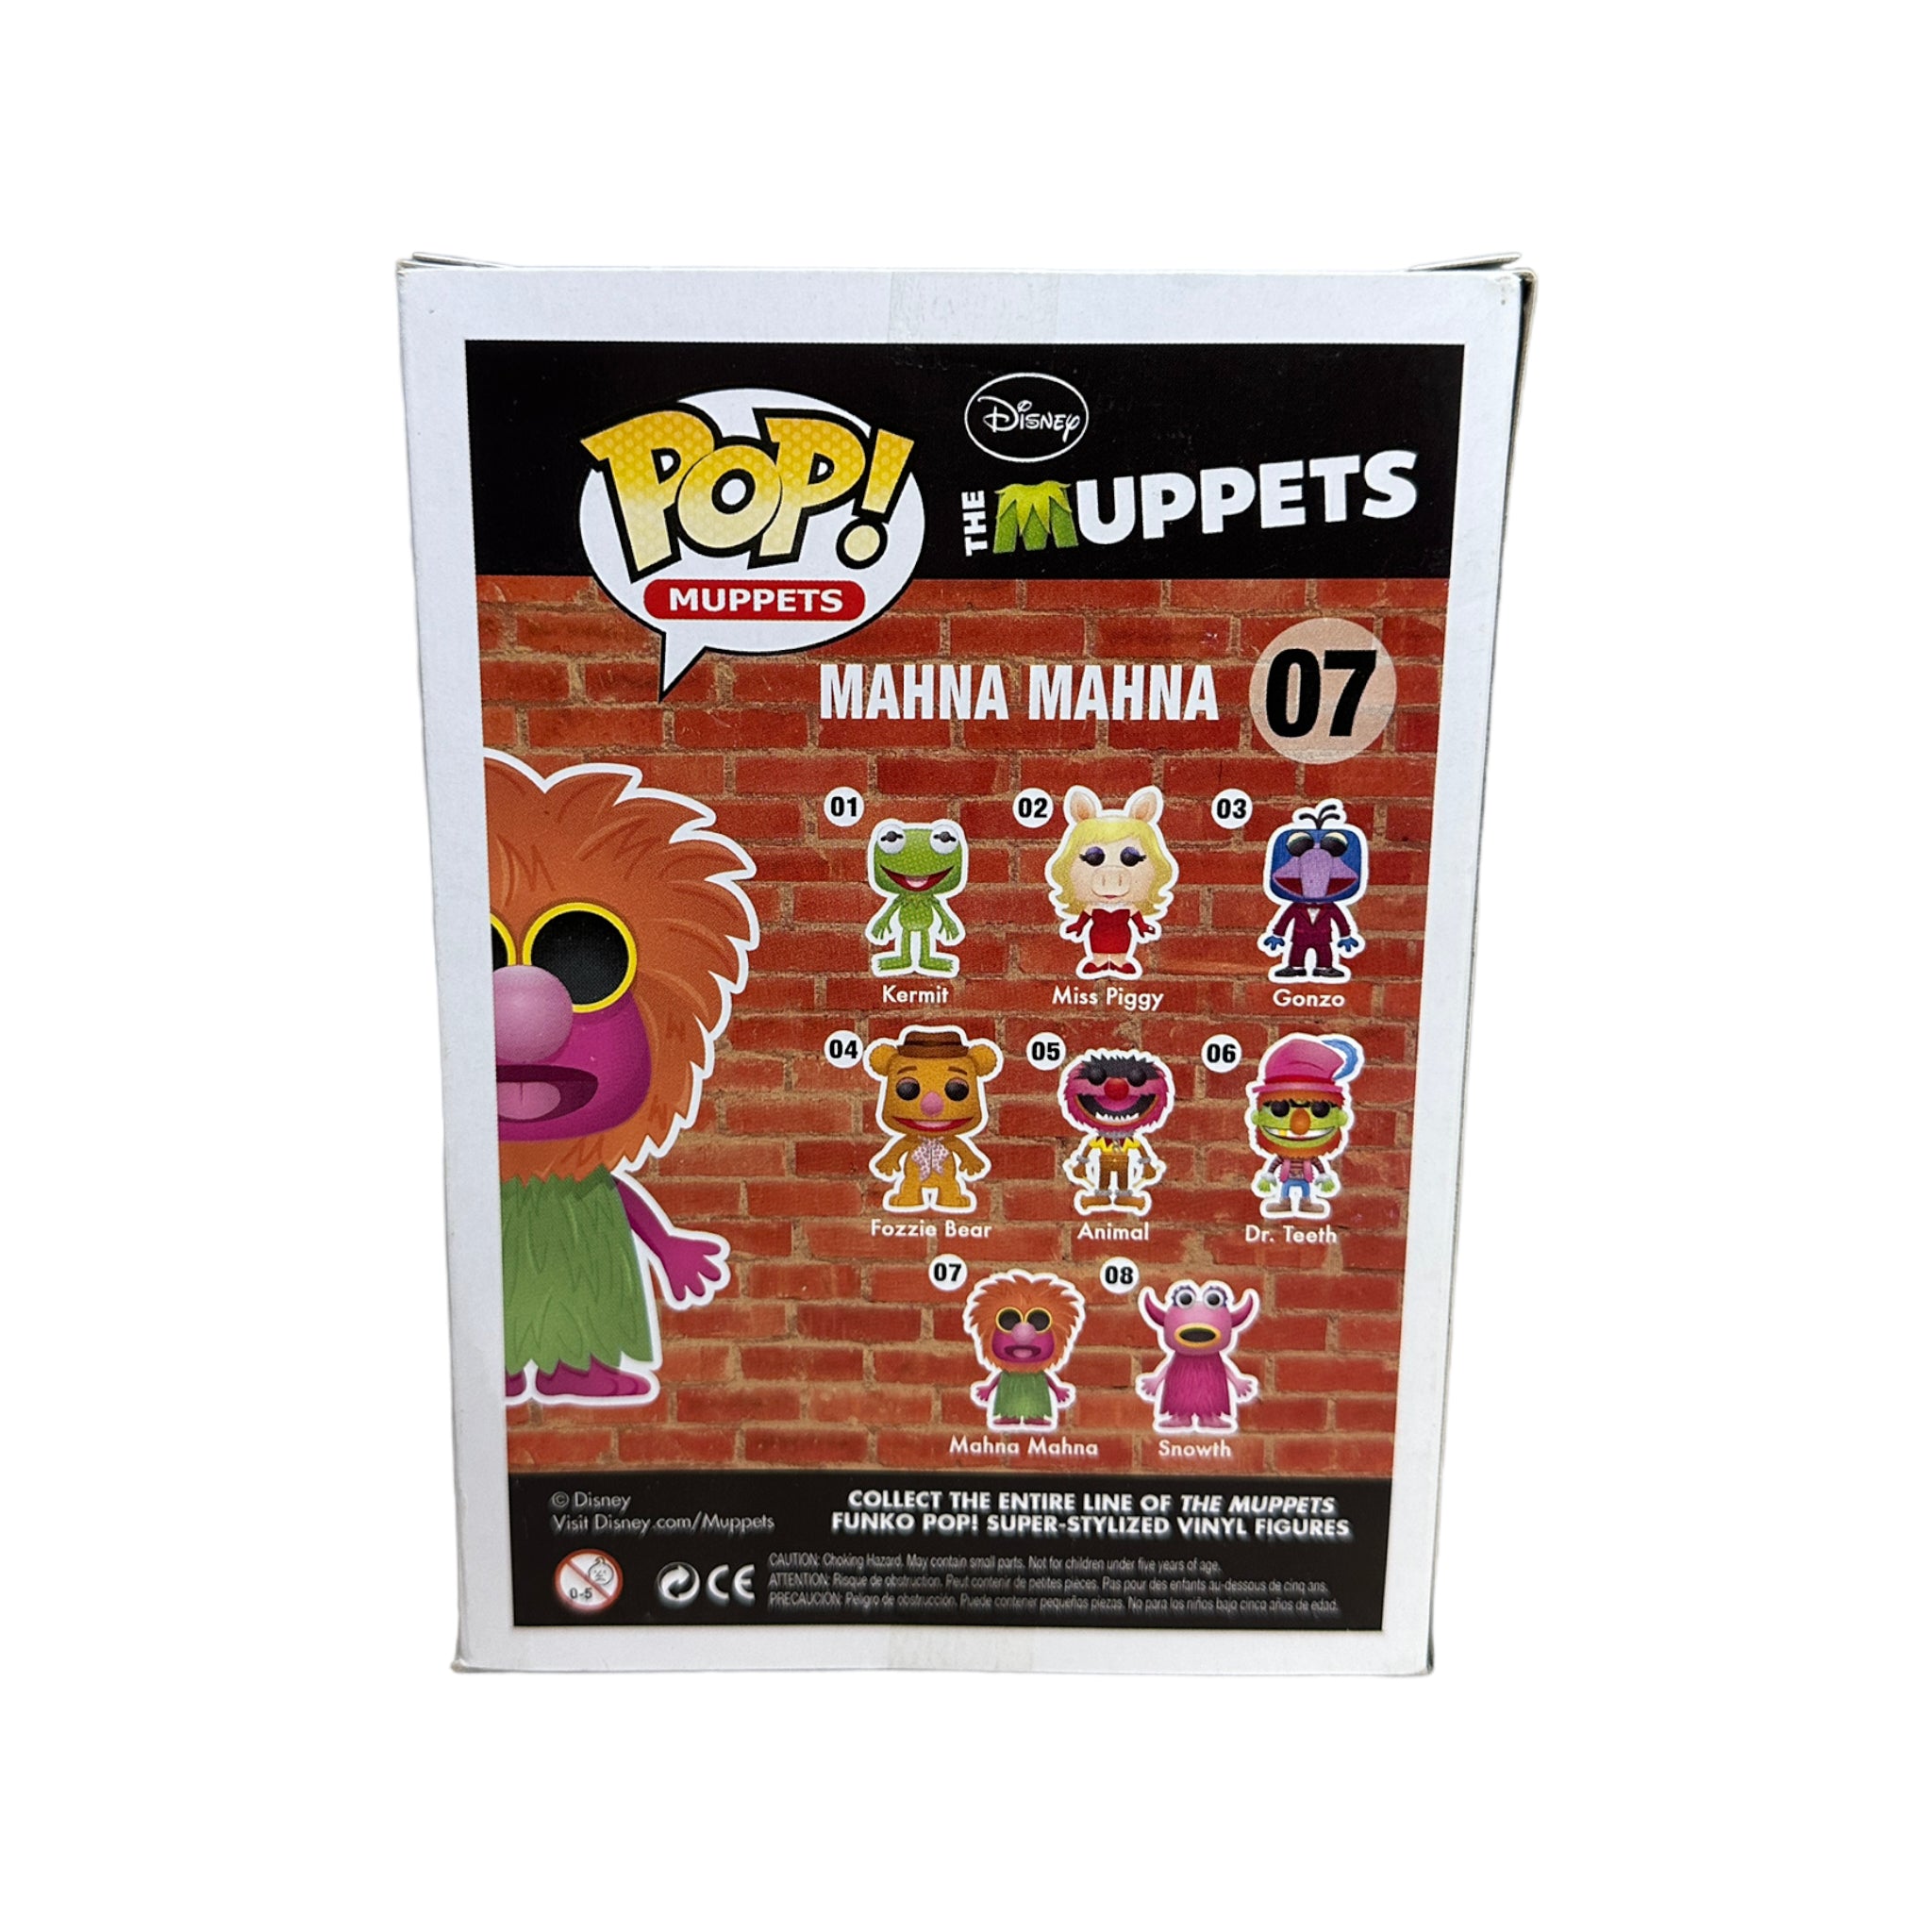 Mahna Mahna #07 Funko Pop! - The Muppets - 2012 Pop! - Condition 6.5/10